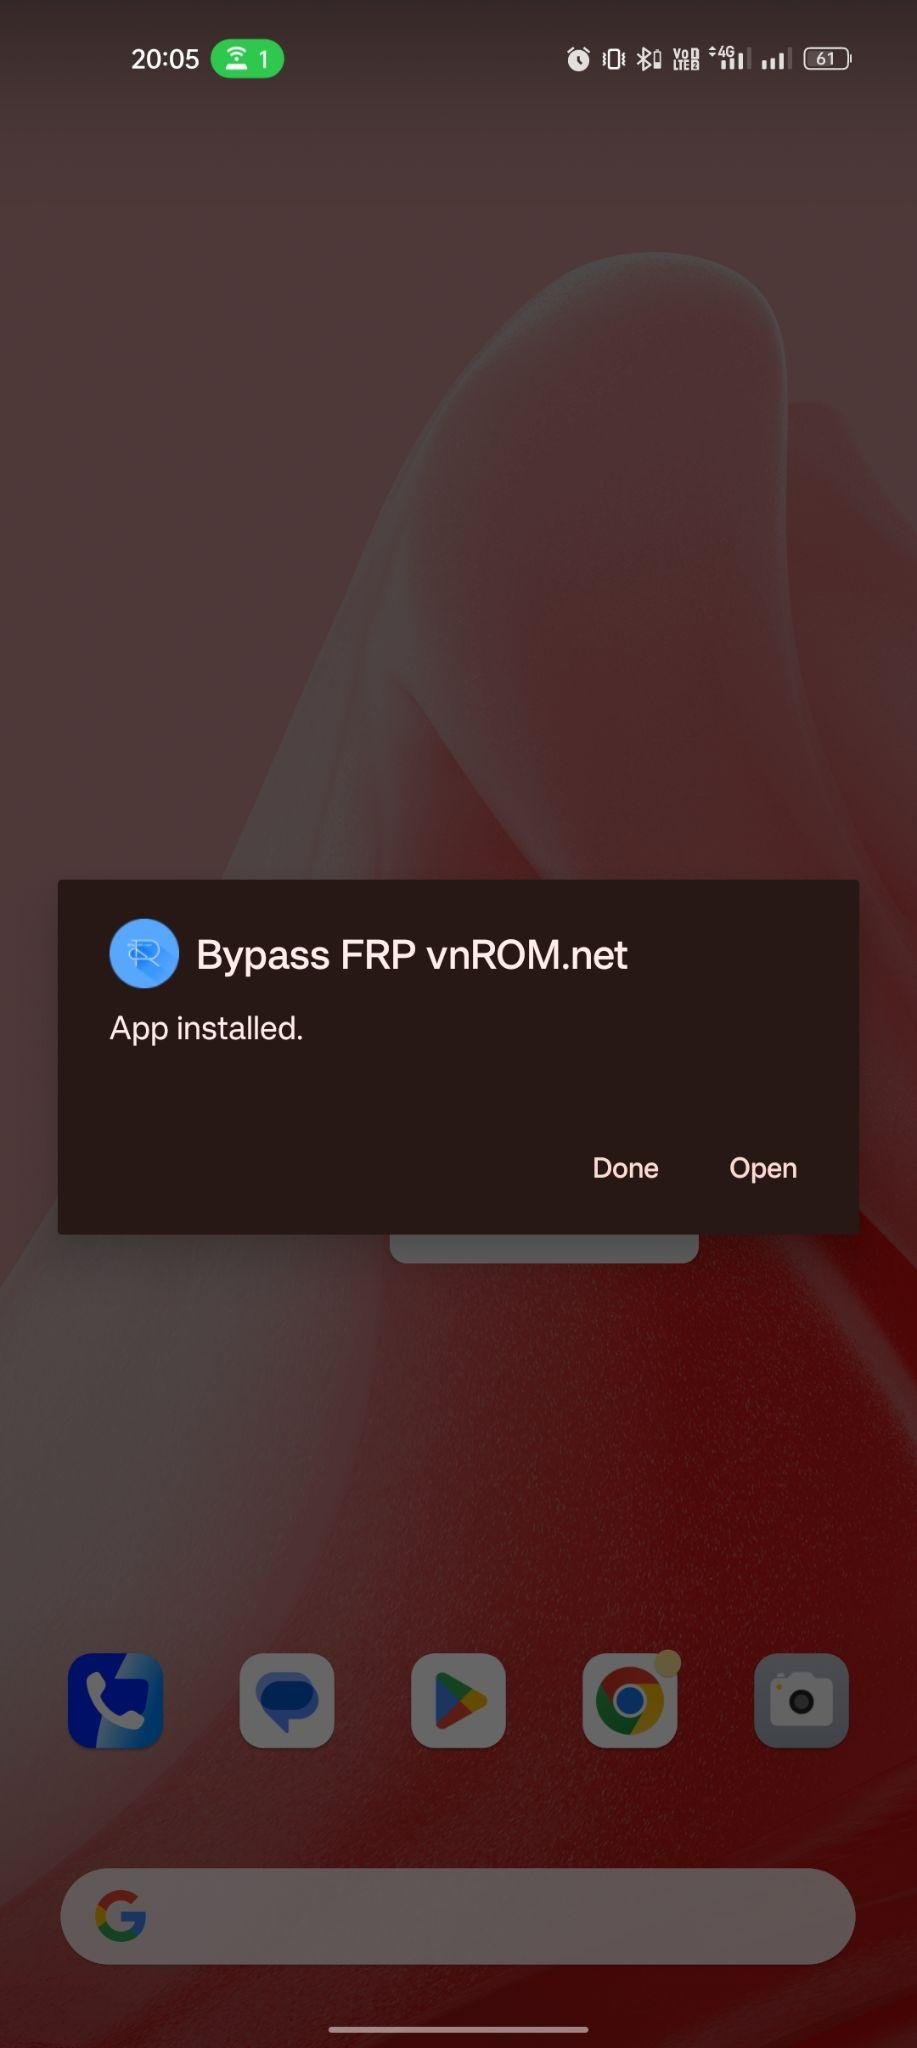 vnROM Bypass FRP apk installed